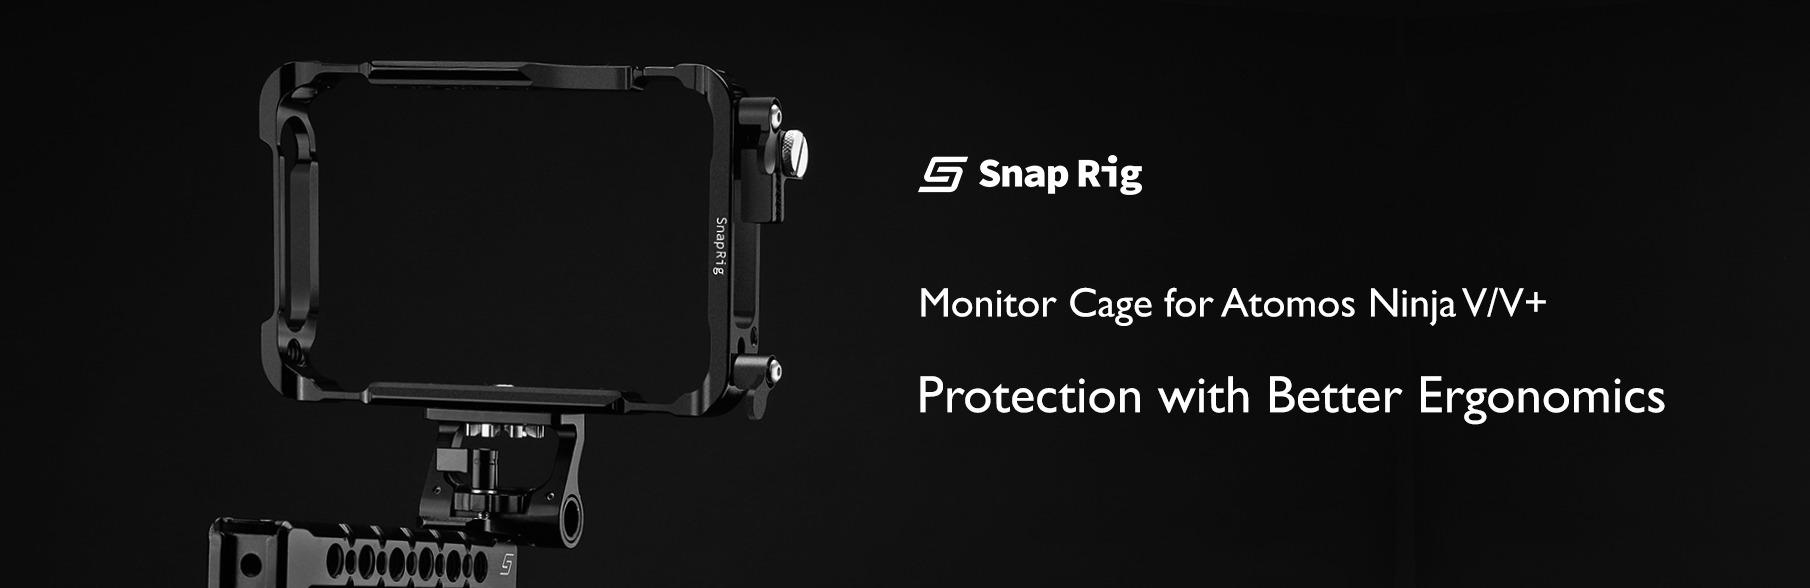 Proaim SnapRig Monitor Cage for Atomos Ninja V/V+ | CG-03